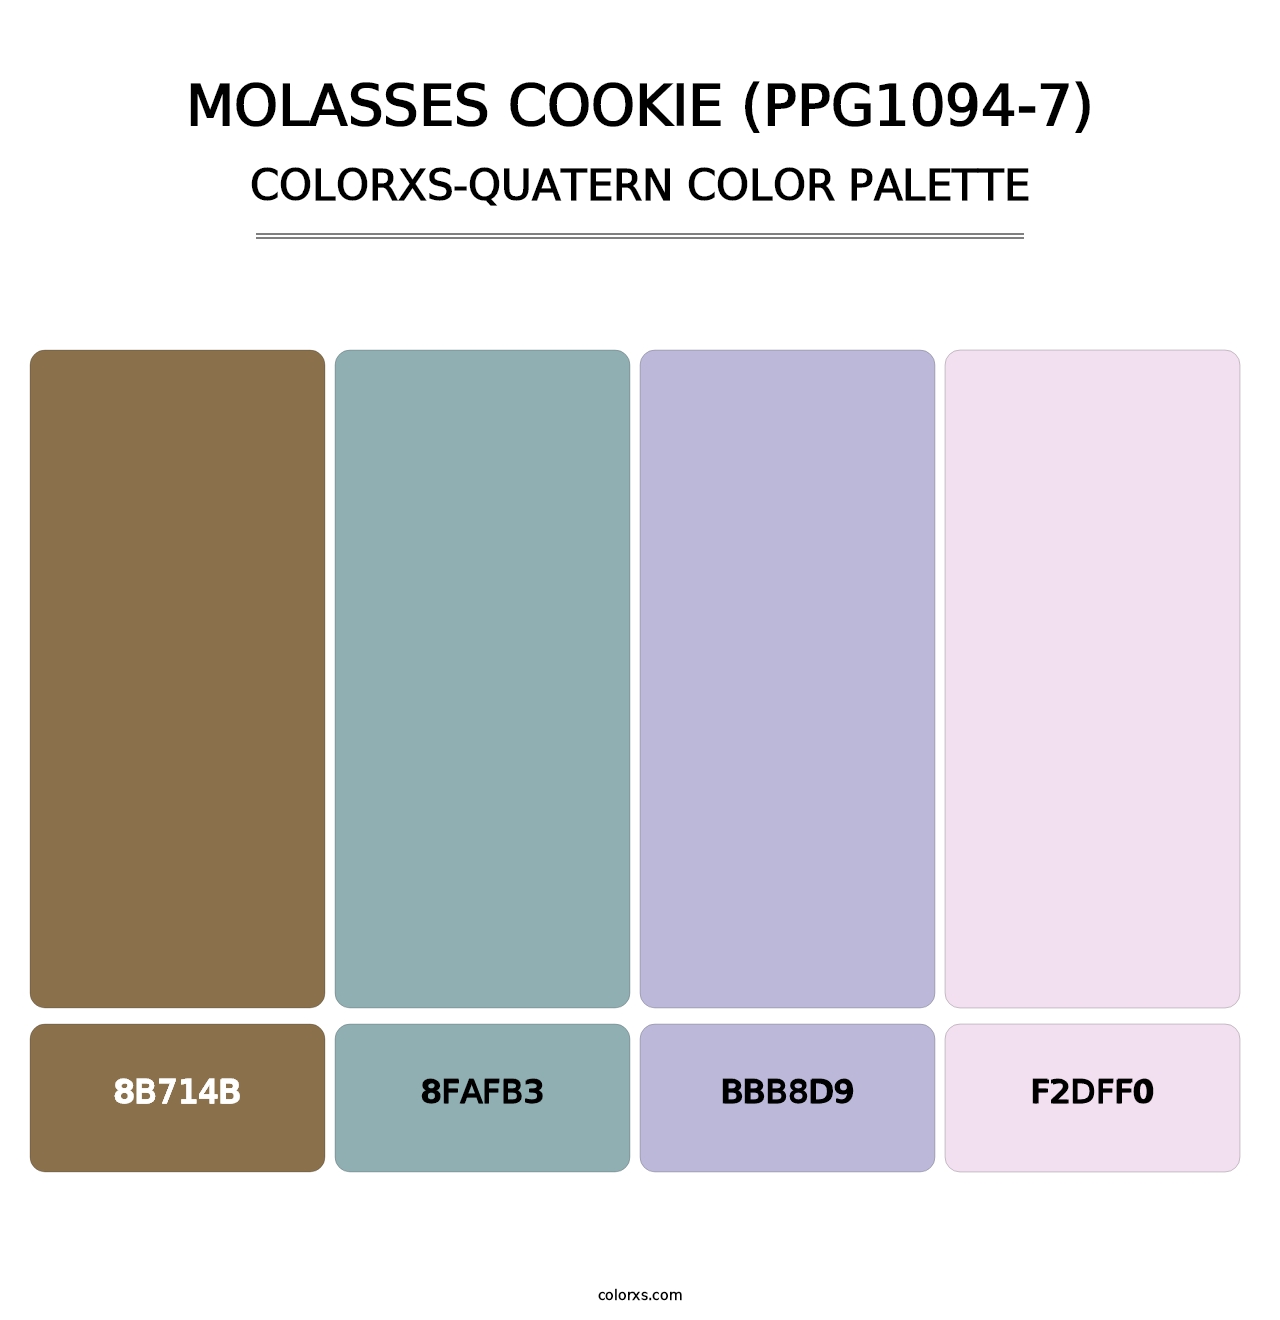 Molasses Cookie (PPG1094-7) - Colorxs Quatern Palette